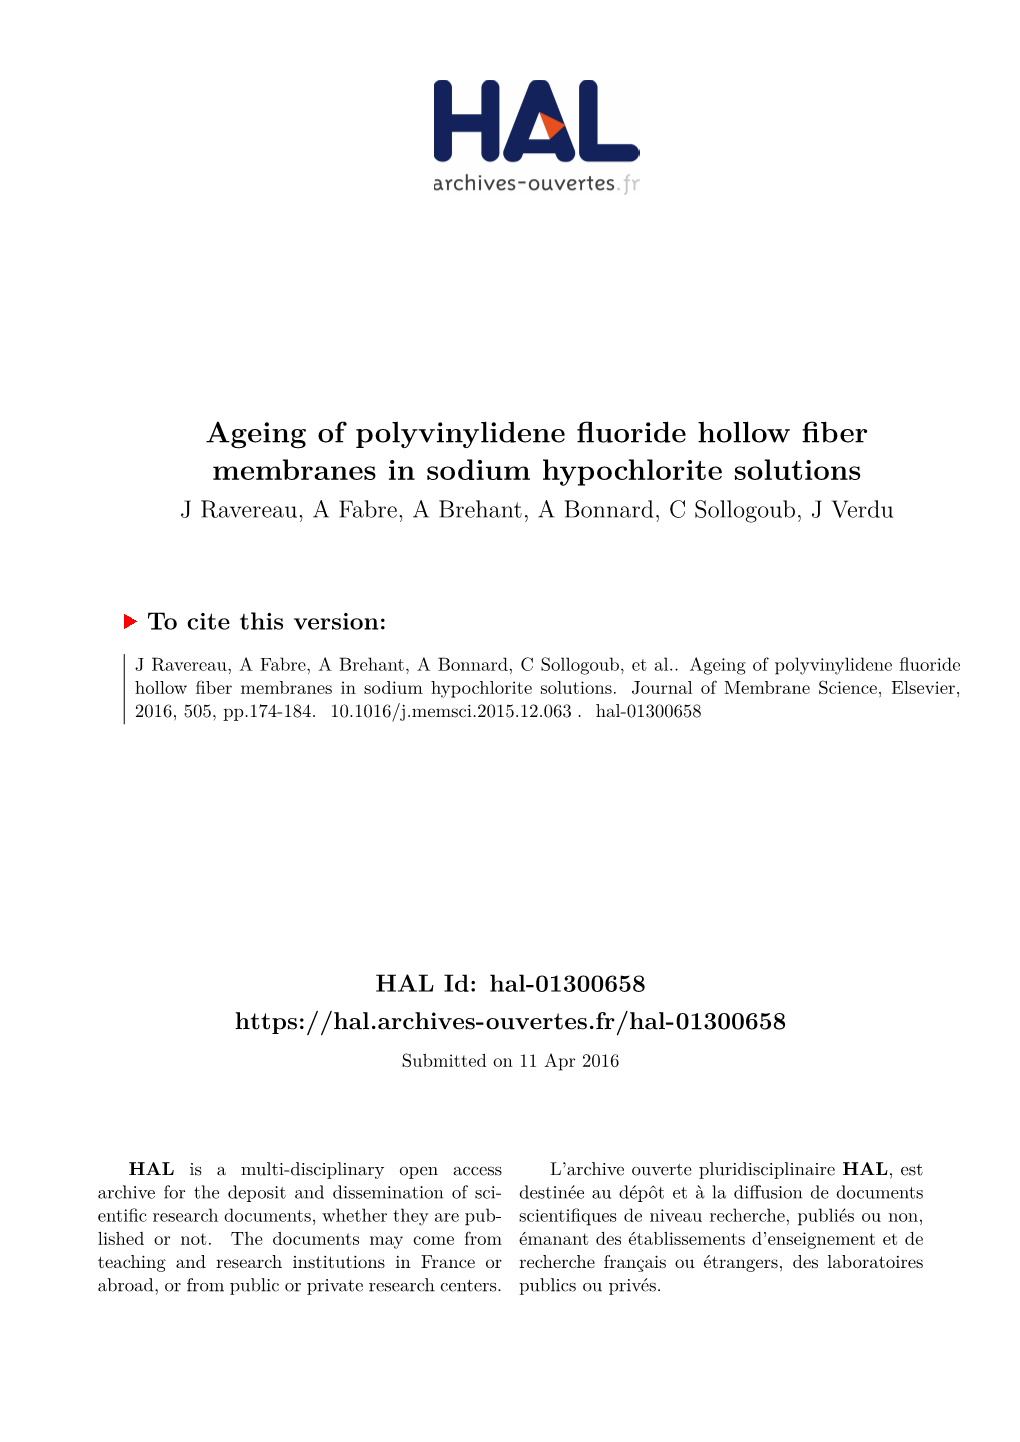 Ageing of Polyvinylidene Fluoride Hollow Fiber Membranes in Sodium Hypochlorite Solutions J Ravereau, a Fabre, a Brehant, a Bonnard, C Sollogoub, J Verdu